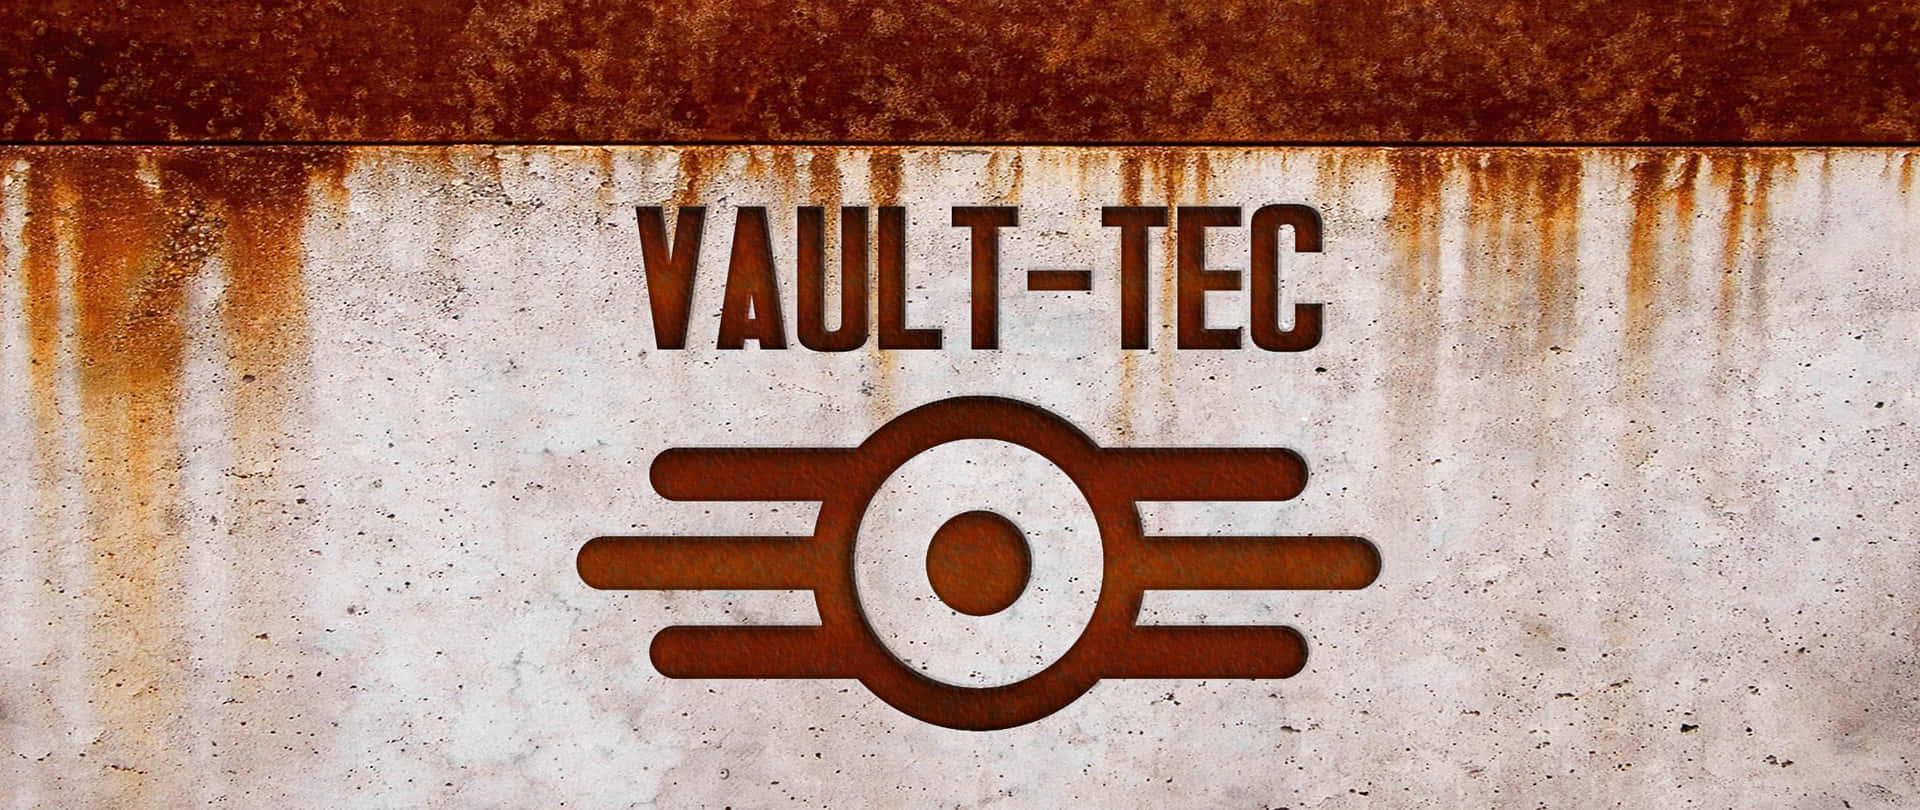 Vault-Tec logo on a rustic surface Wallpaper